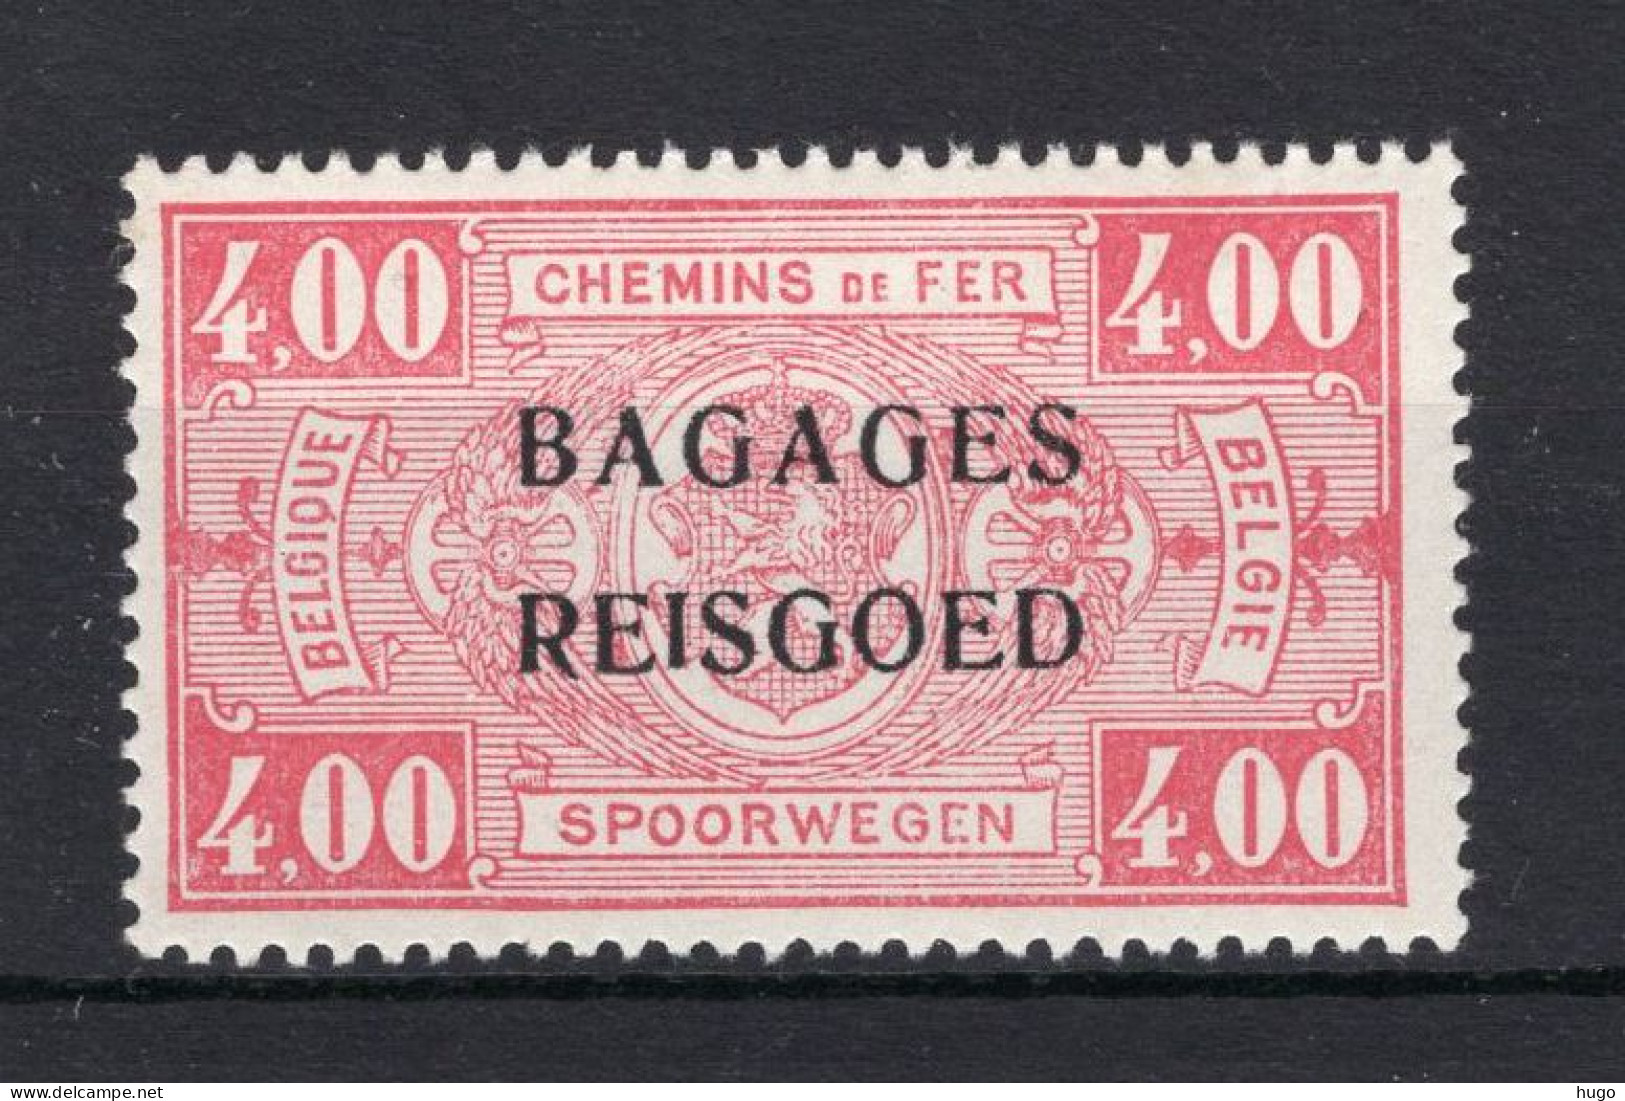 BA13 MNH** 1935 - Spoorwegzegels Met Opdruk "BAGAGES - REISGOED" - Sot  - Luggage [BA]